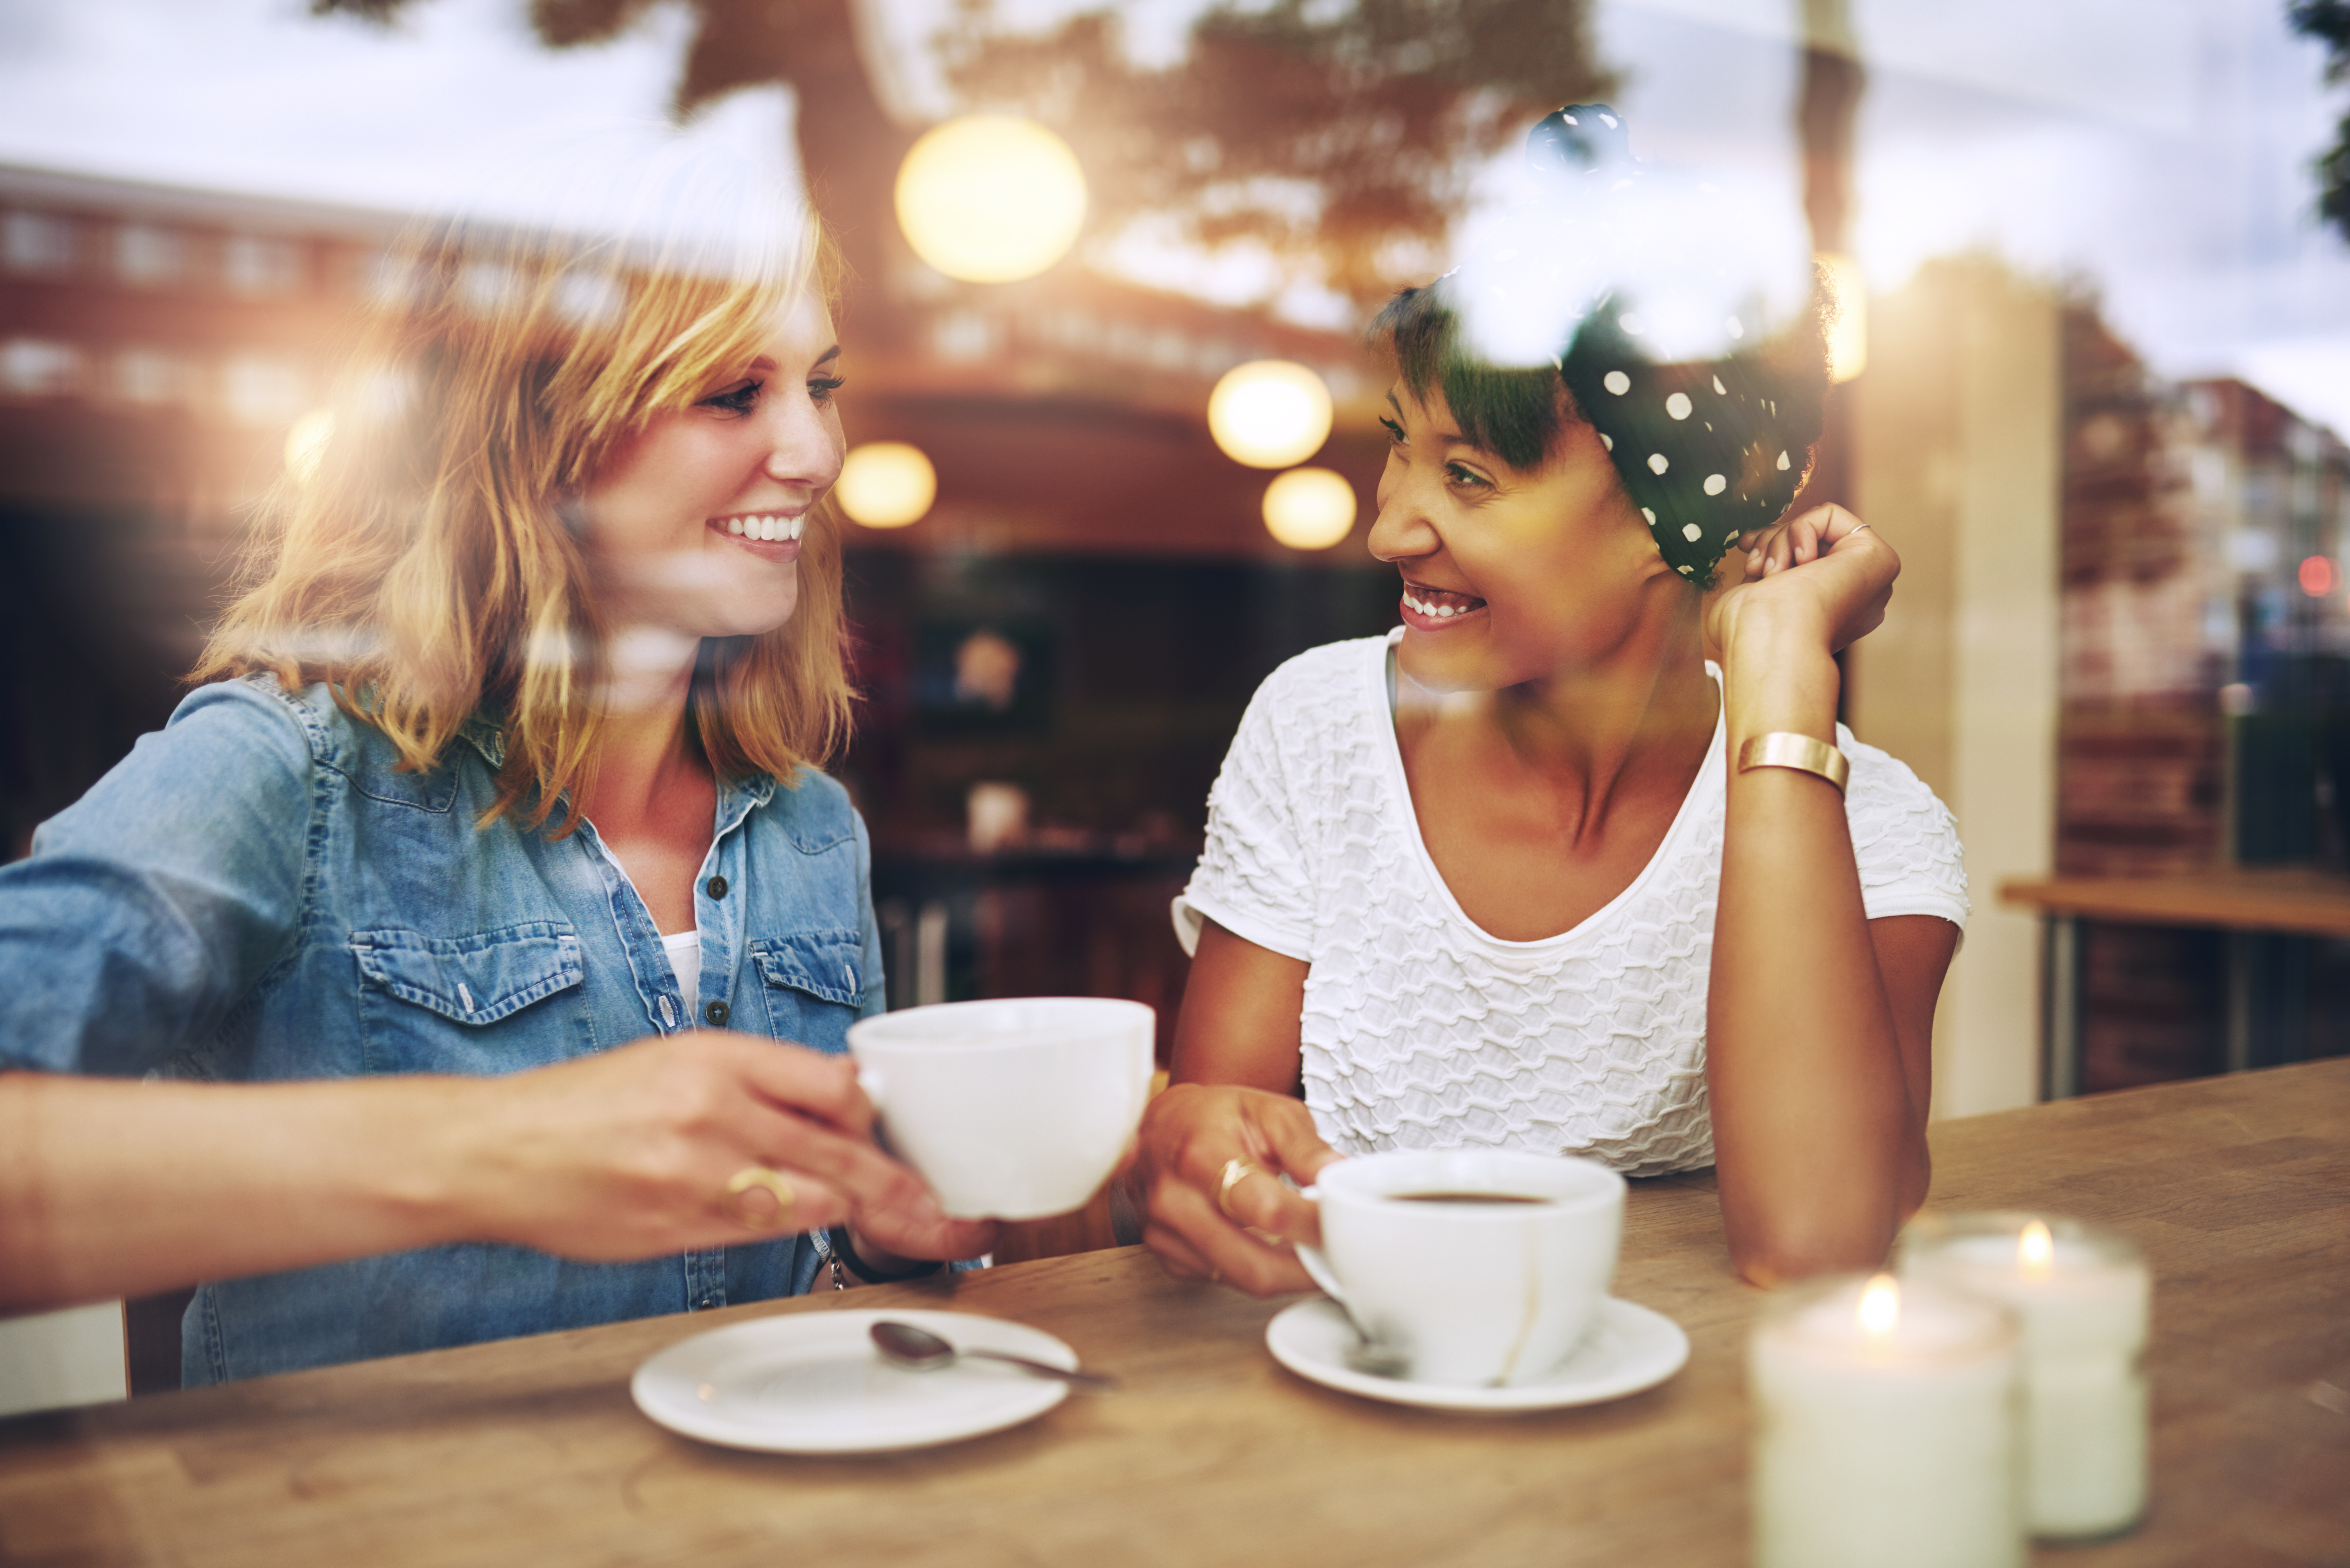 Two women enjoying coffee together in a coffee shop | Source: Shutterstock